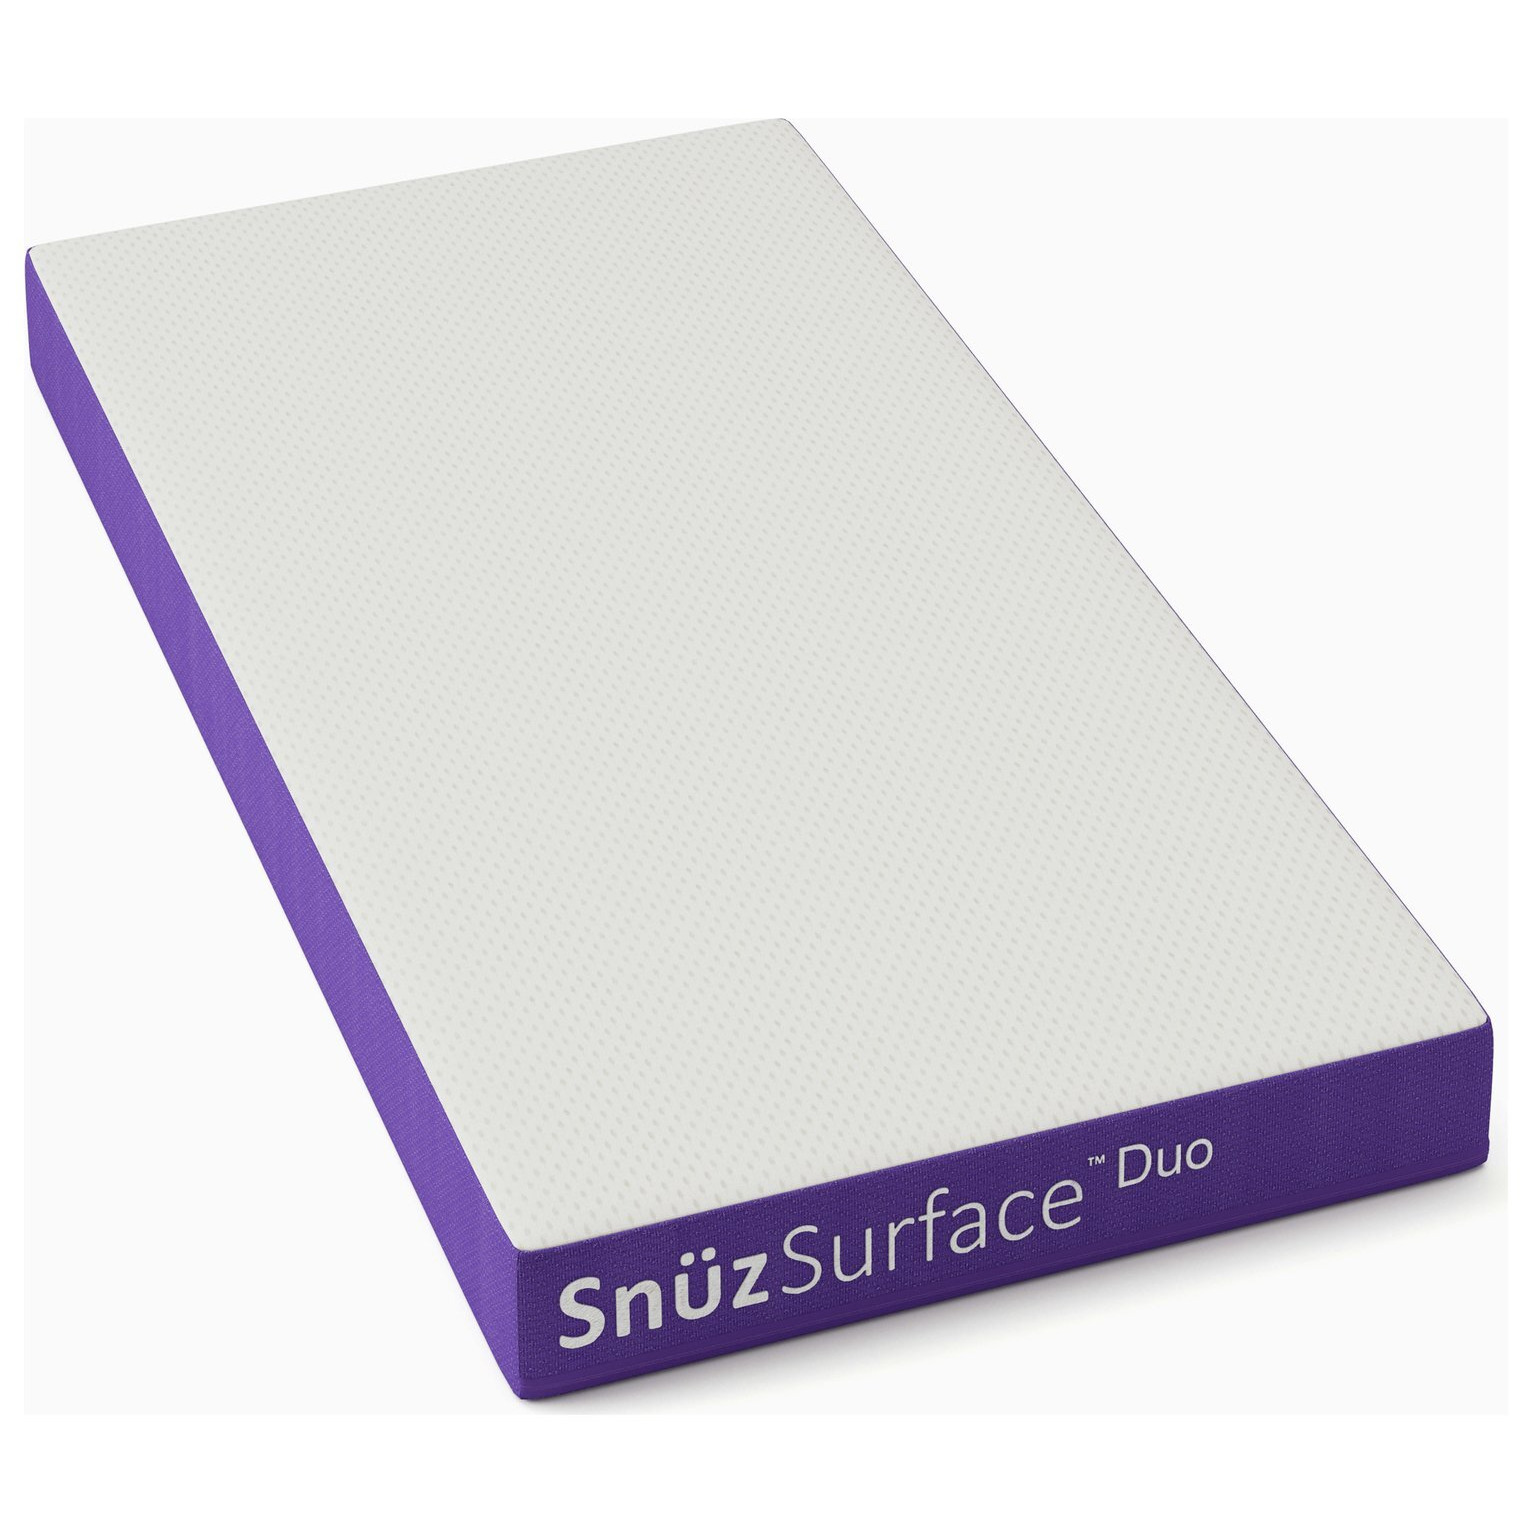 Snuz Surface Duo 70 x 140cm Cot Bed Mattress - image 1